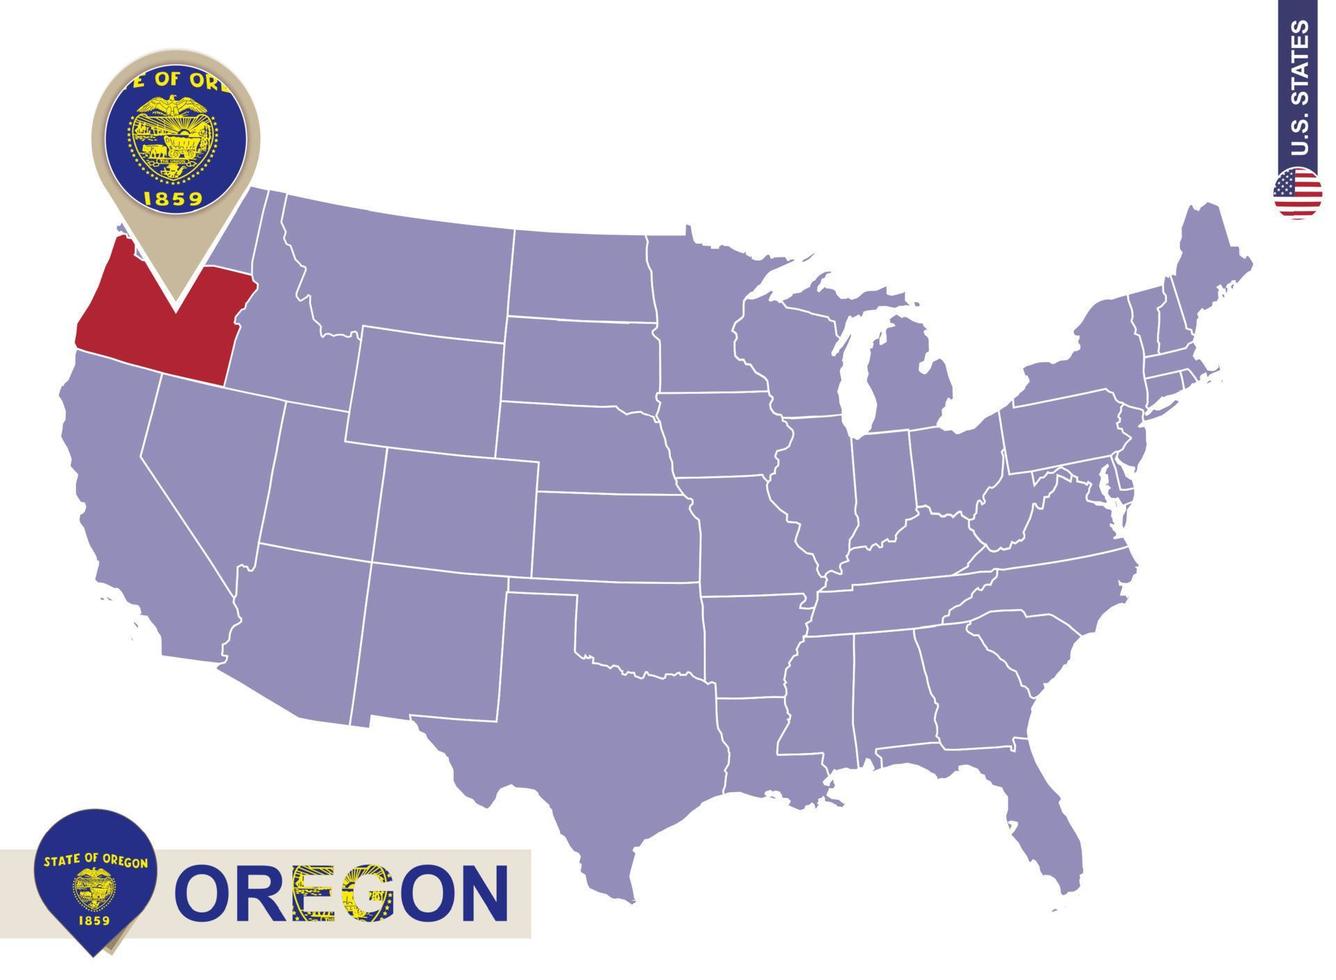 Oregon State on USA Map. Oregon flag and map. vector